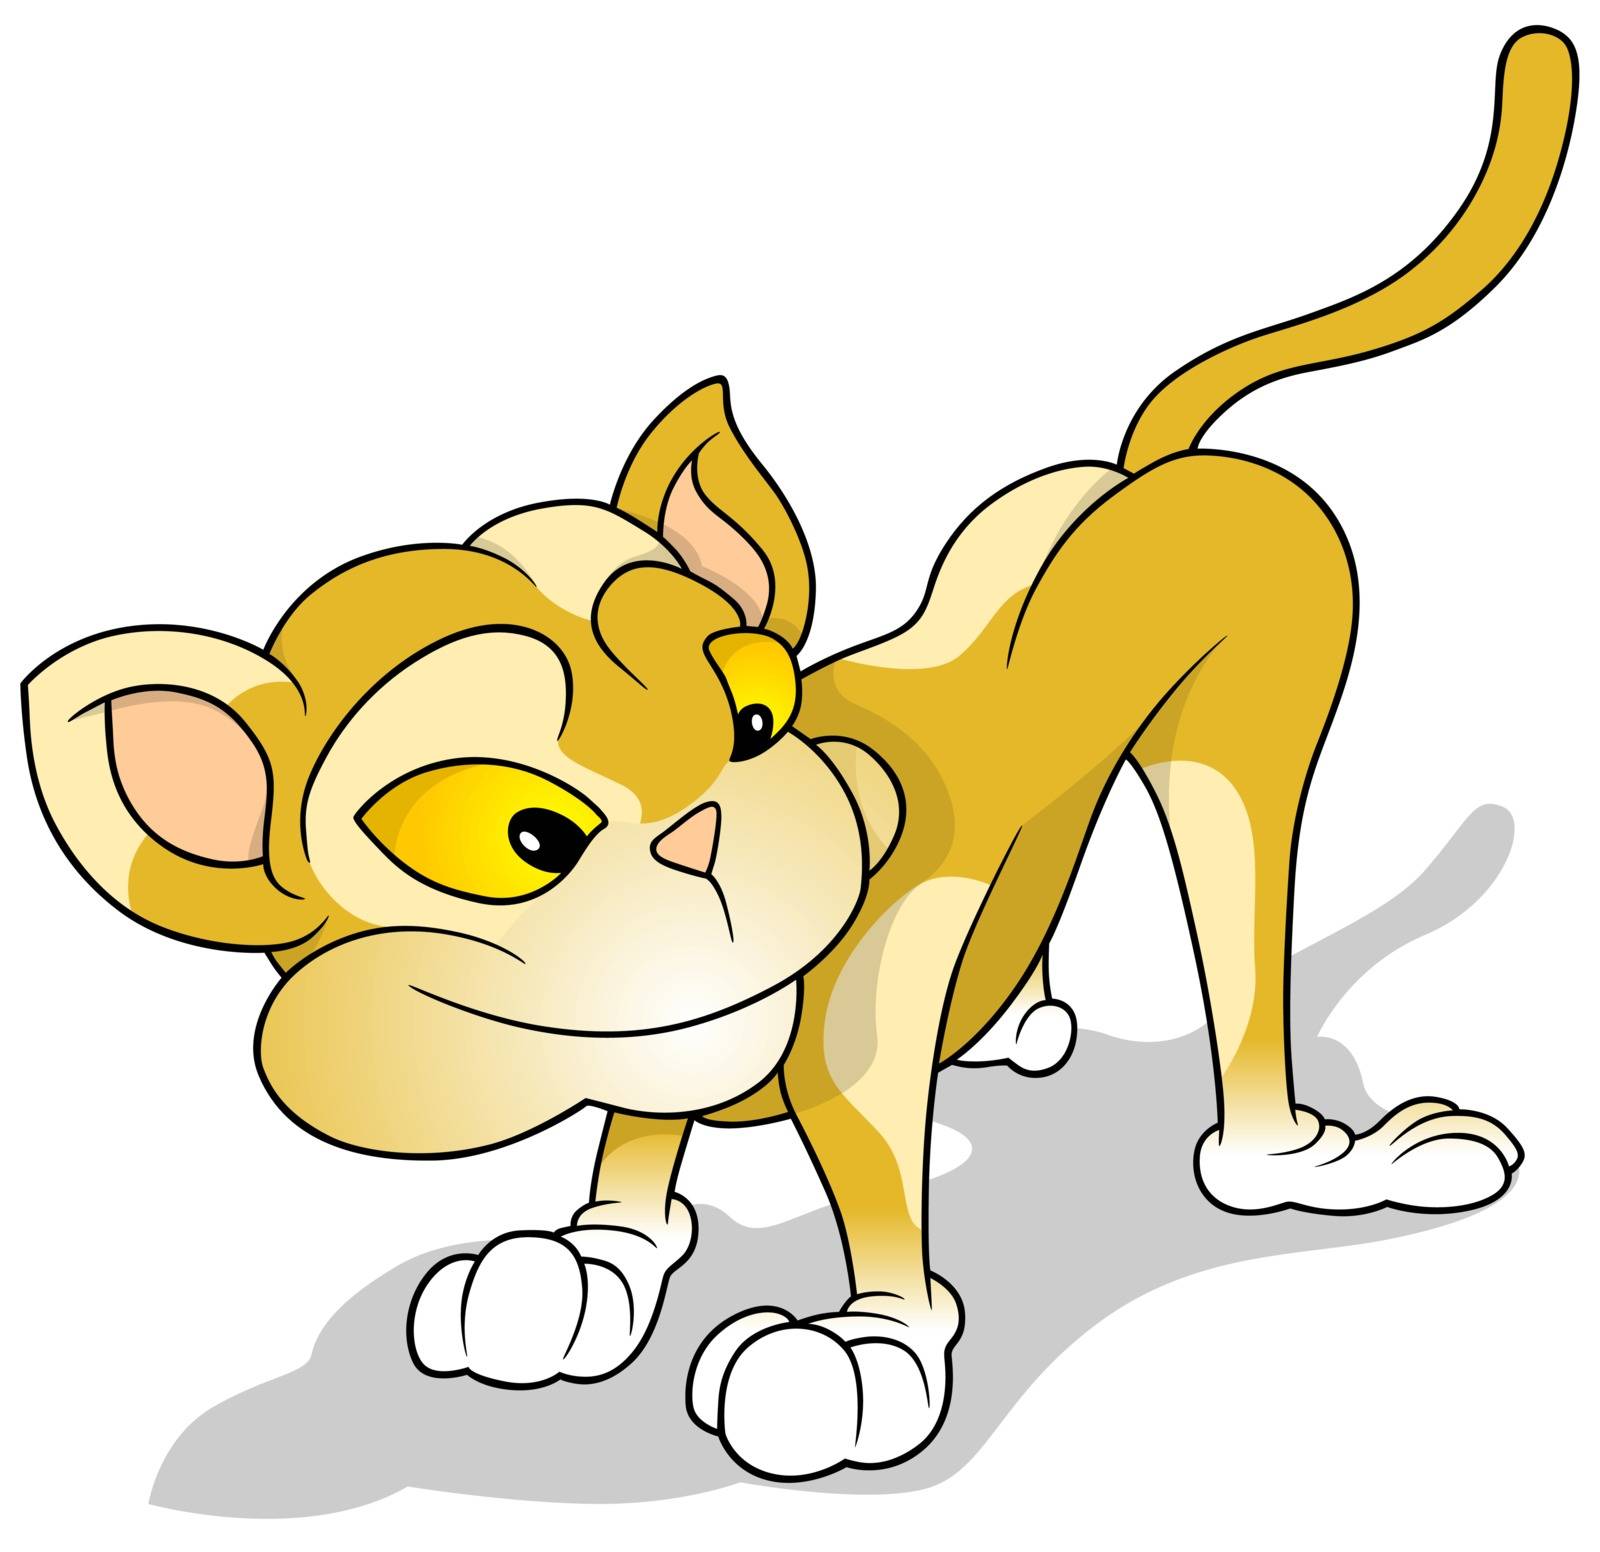 Orange Cartoon Cat - Smiling Pet Animal Illustration, Vector